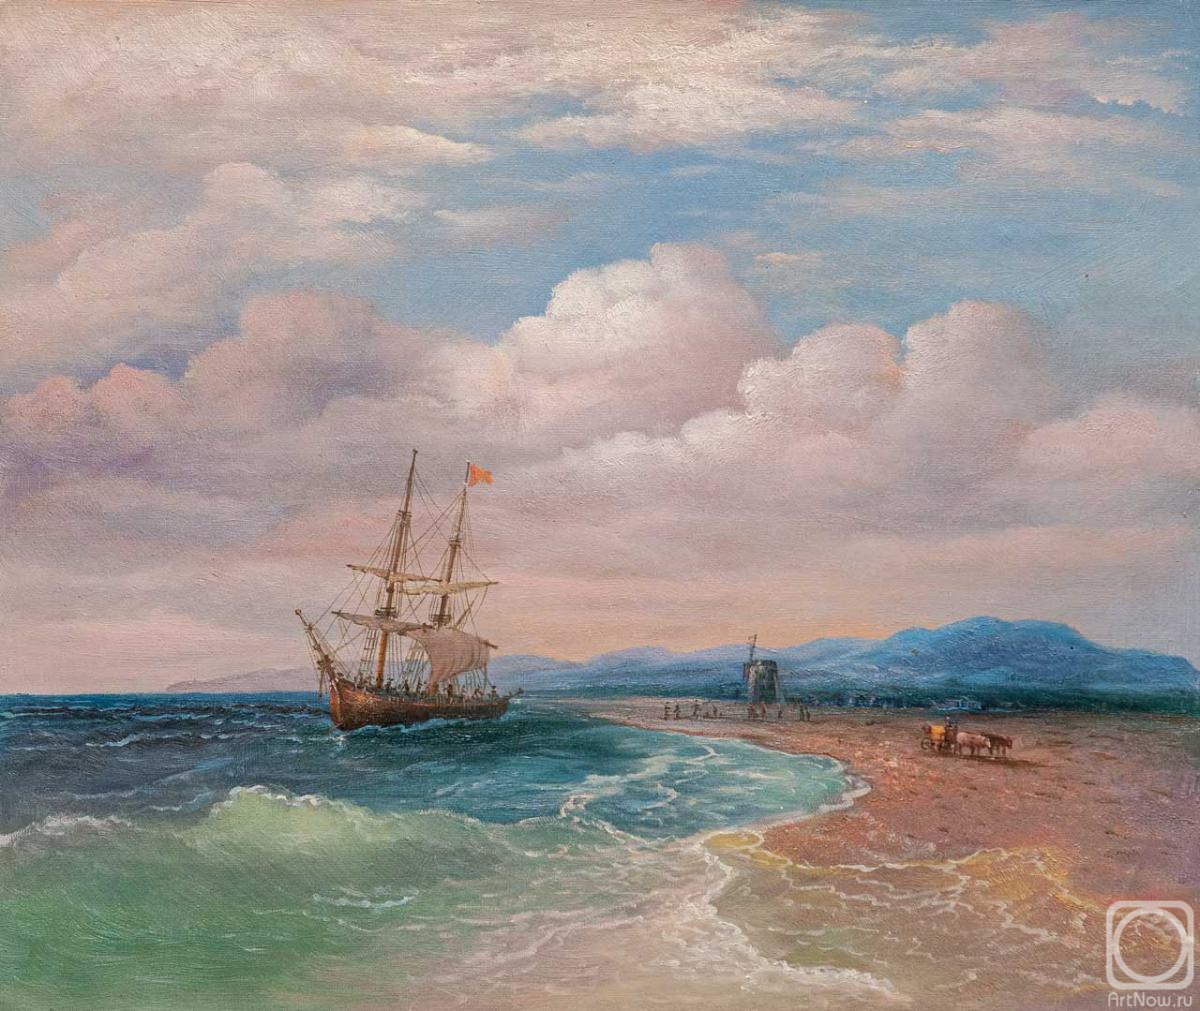 Lagno Daria. A copy of Ivan Aivazovsky's painting. Along the Crimean coast